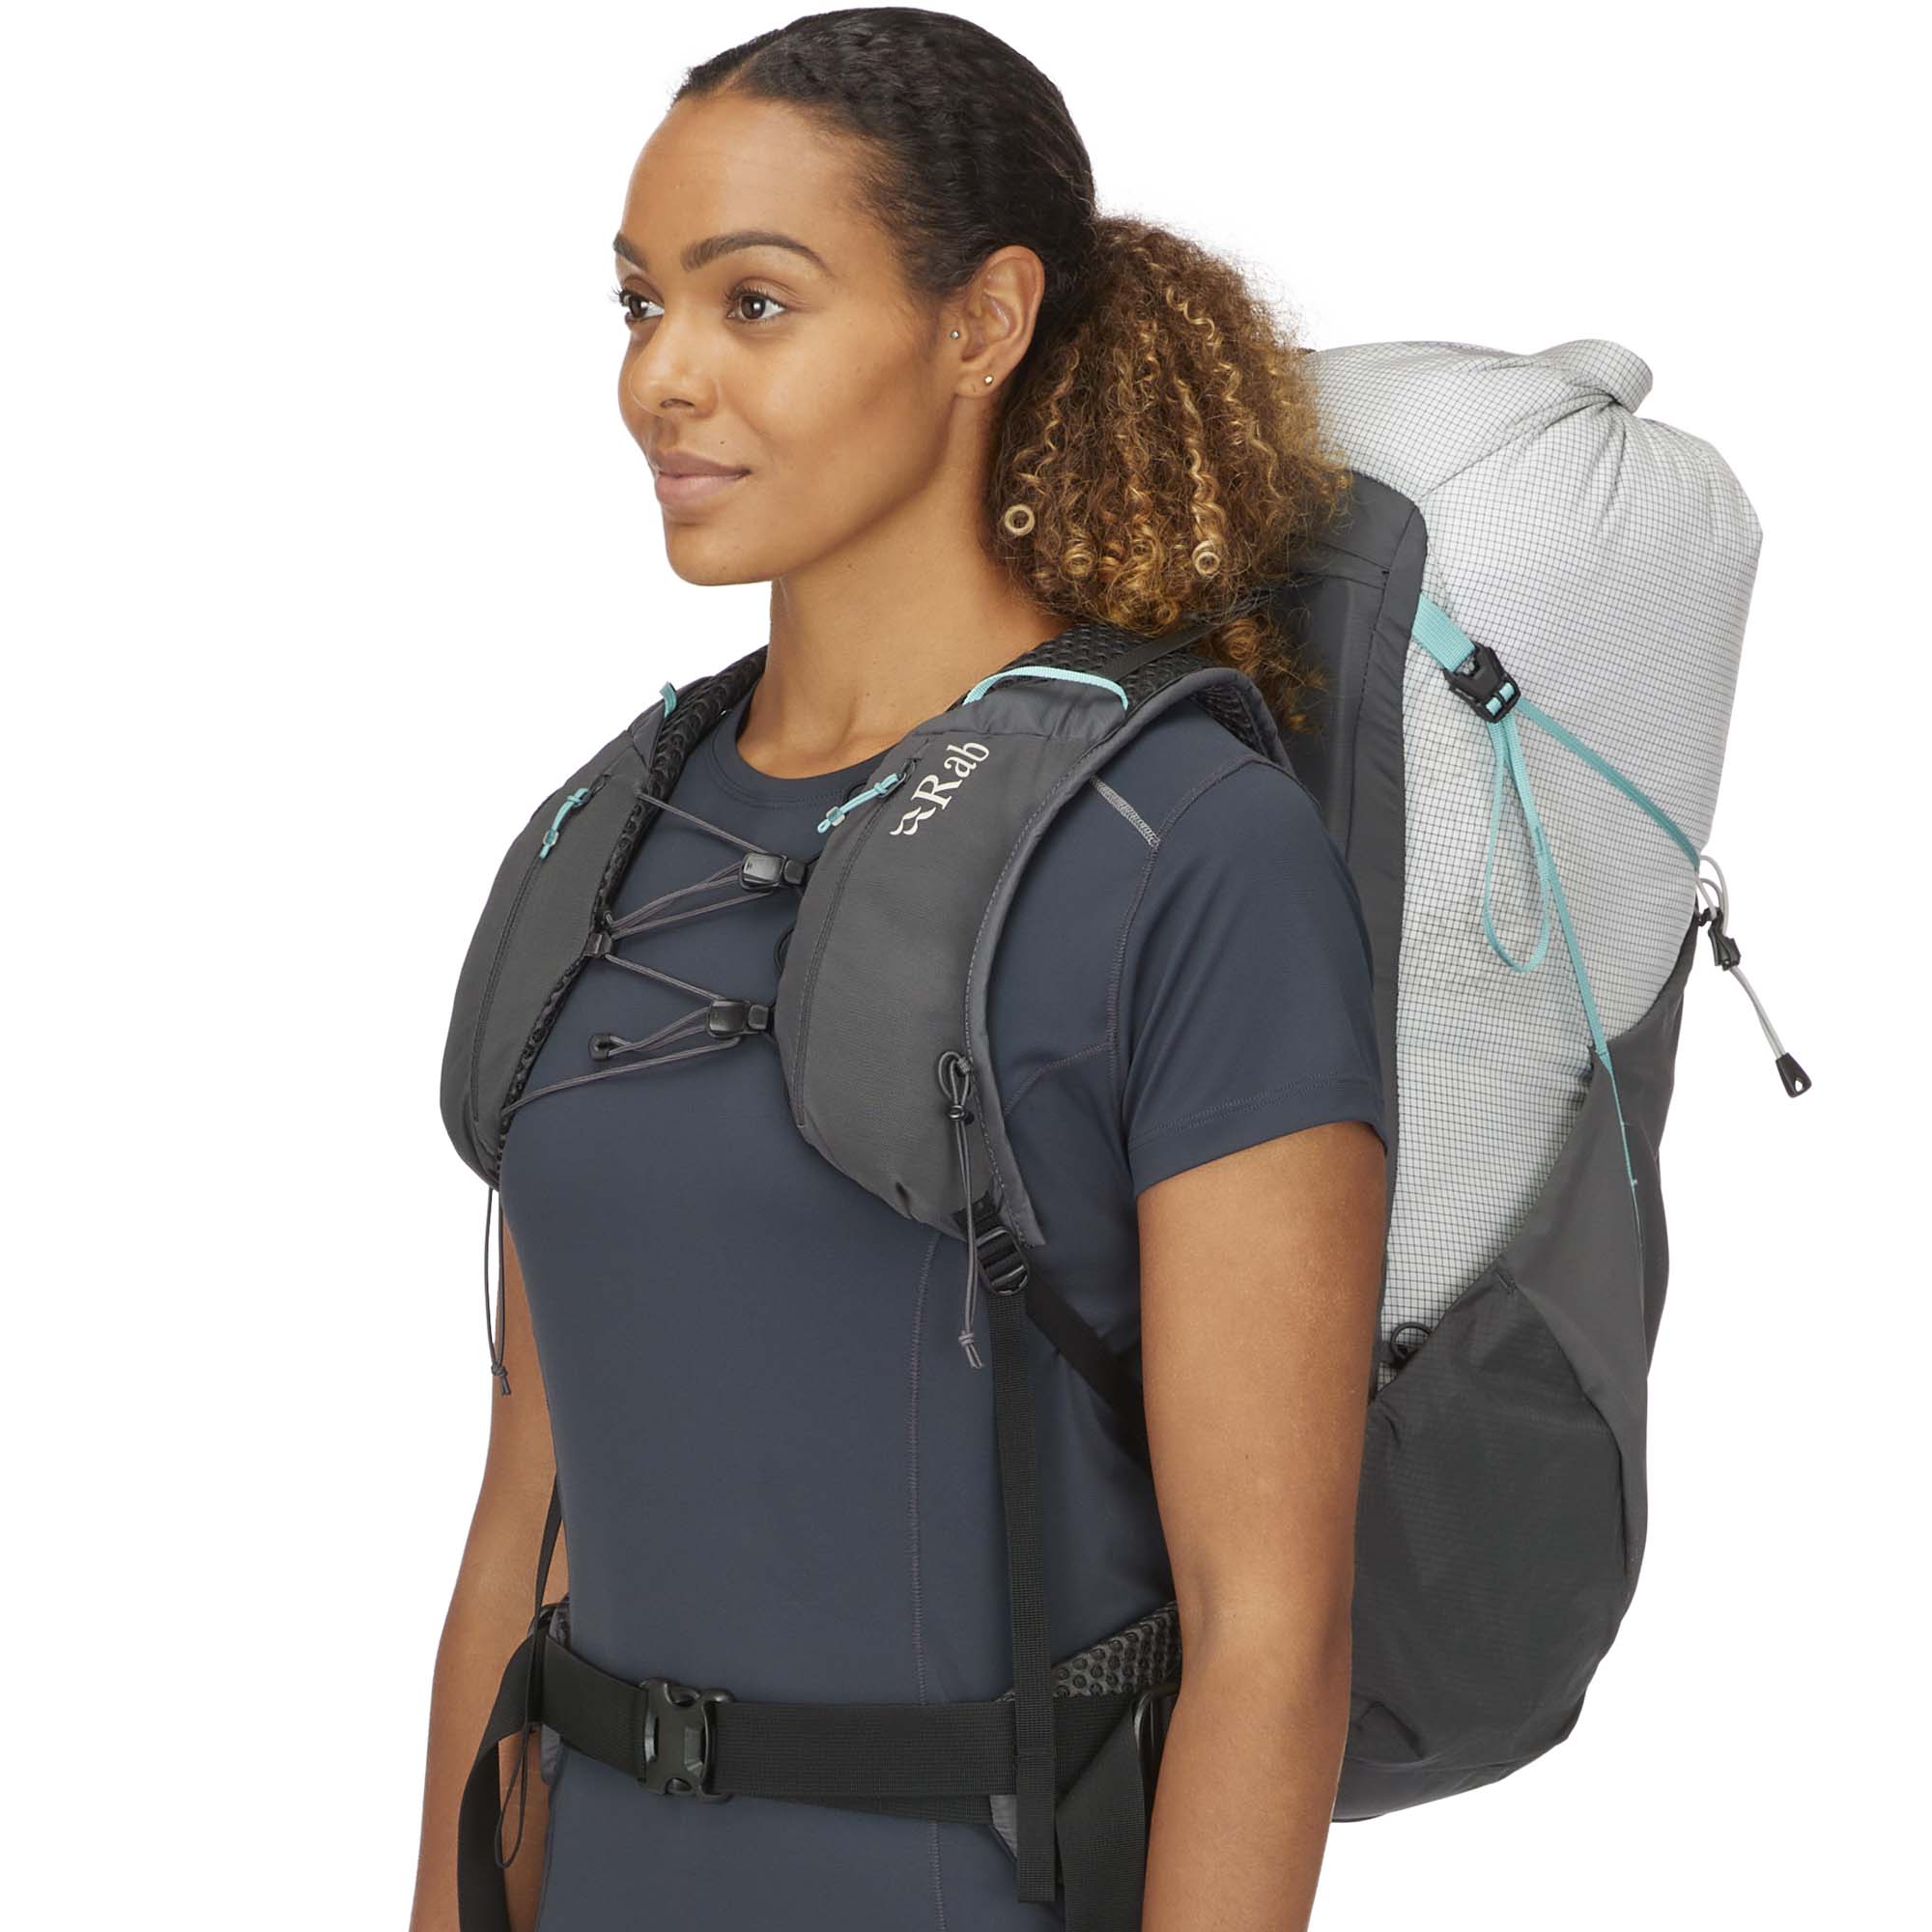 Rab Muon ND 40 Women's Technical Trekking Backpack